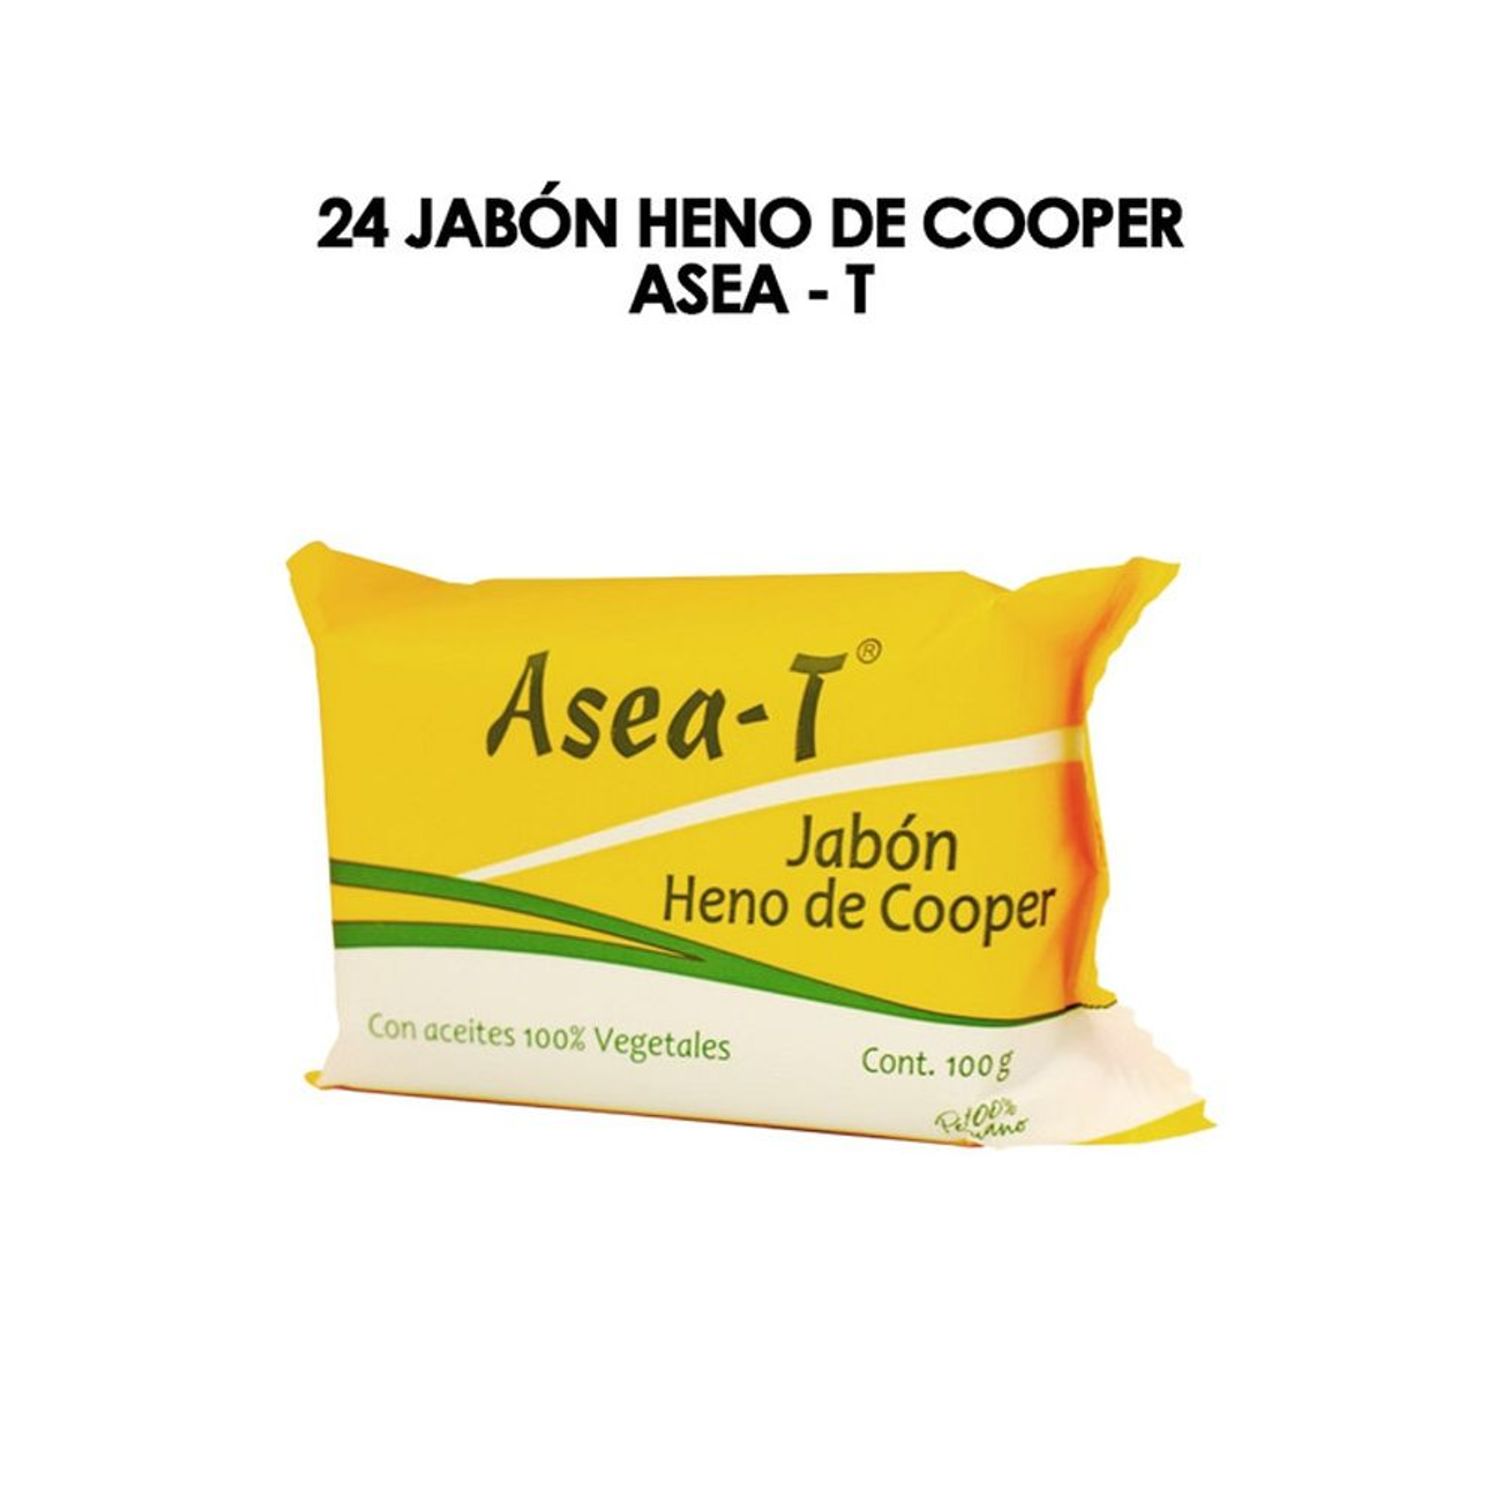 Jabón Heno de Cooper Asea - T 24 Unidades I Oechsle - Oechsle